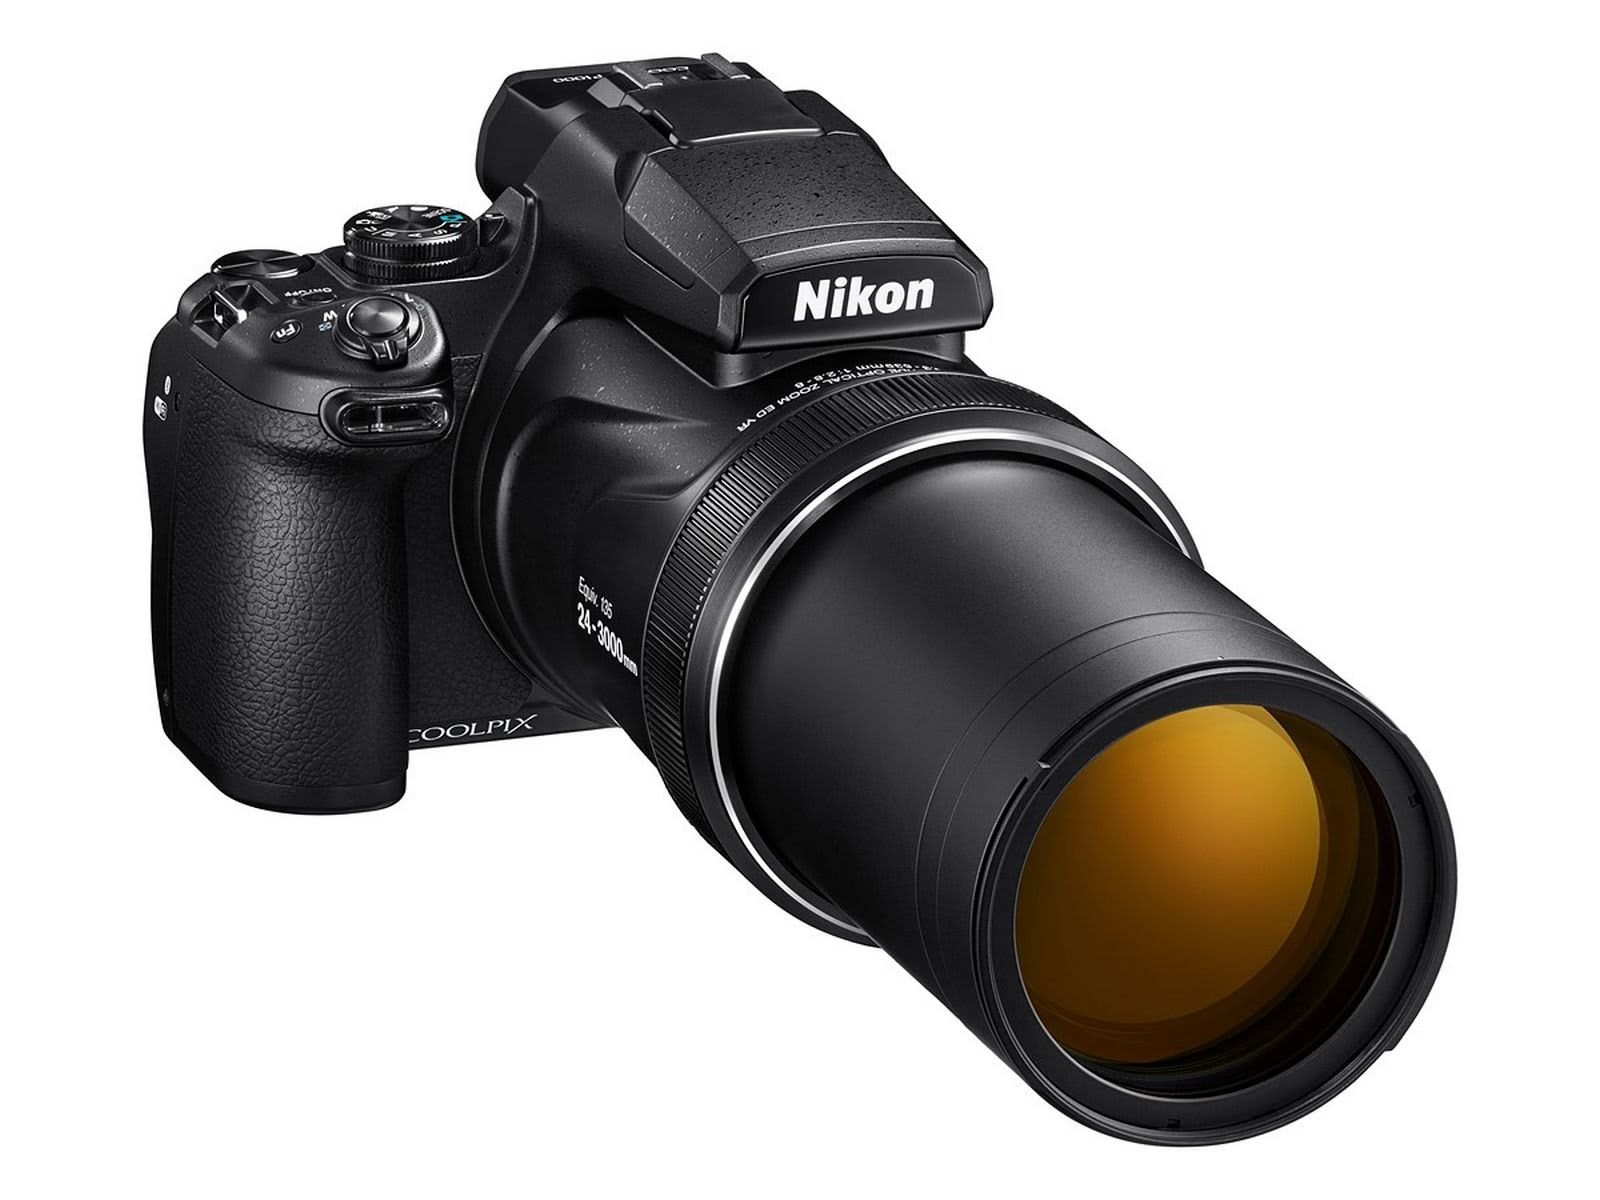 Nikon P1000 superzoom camera